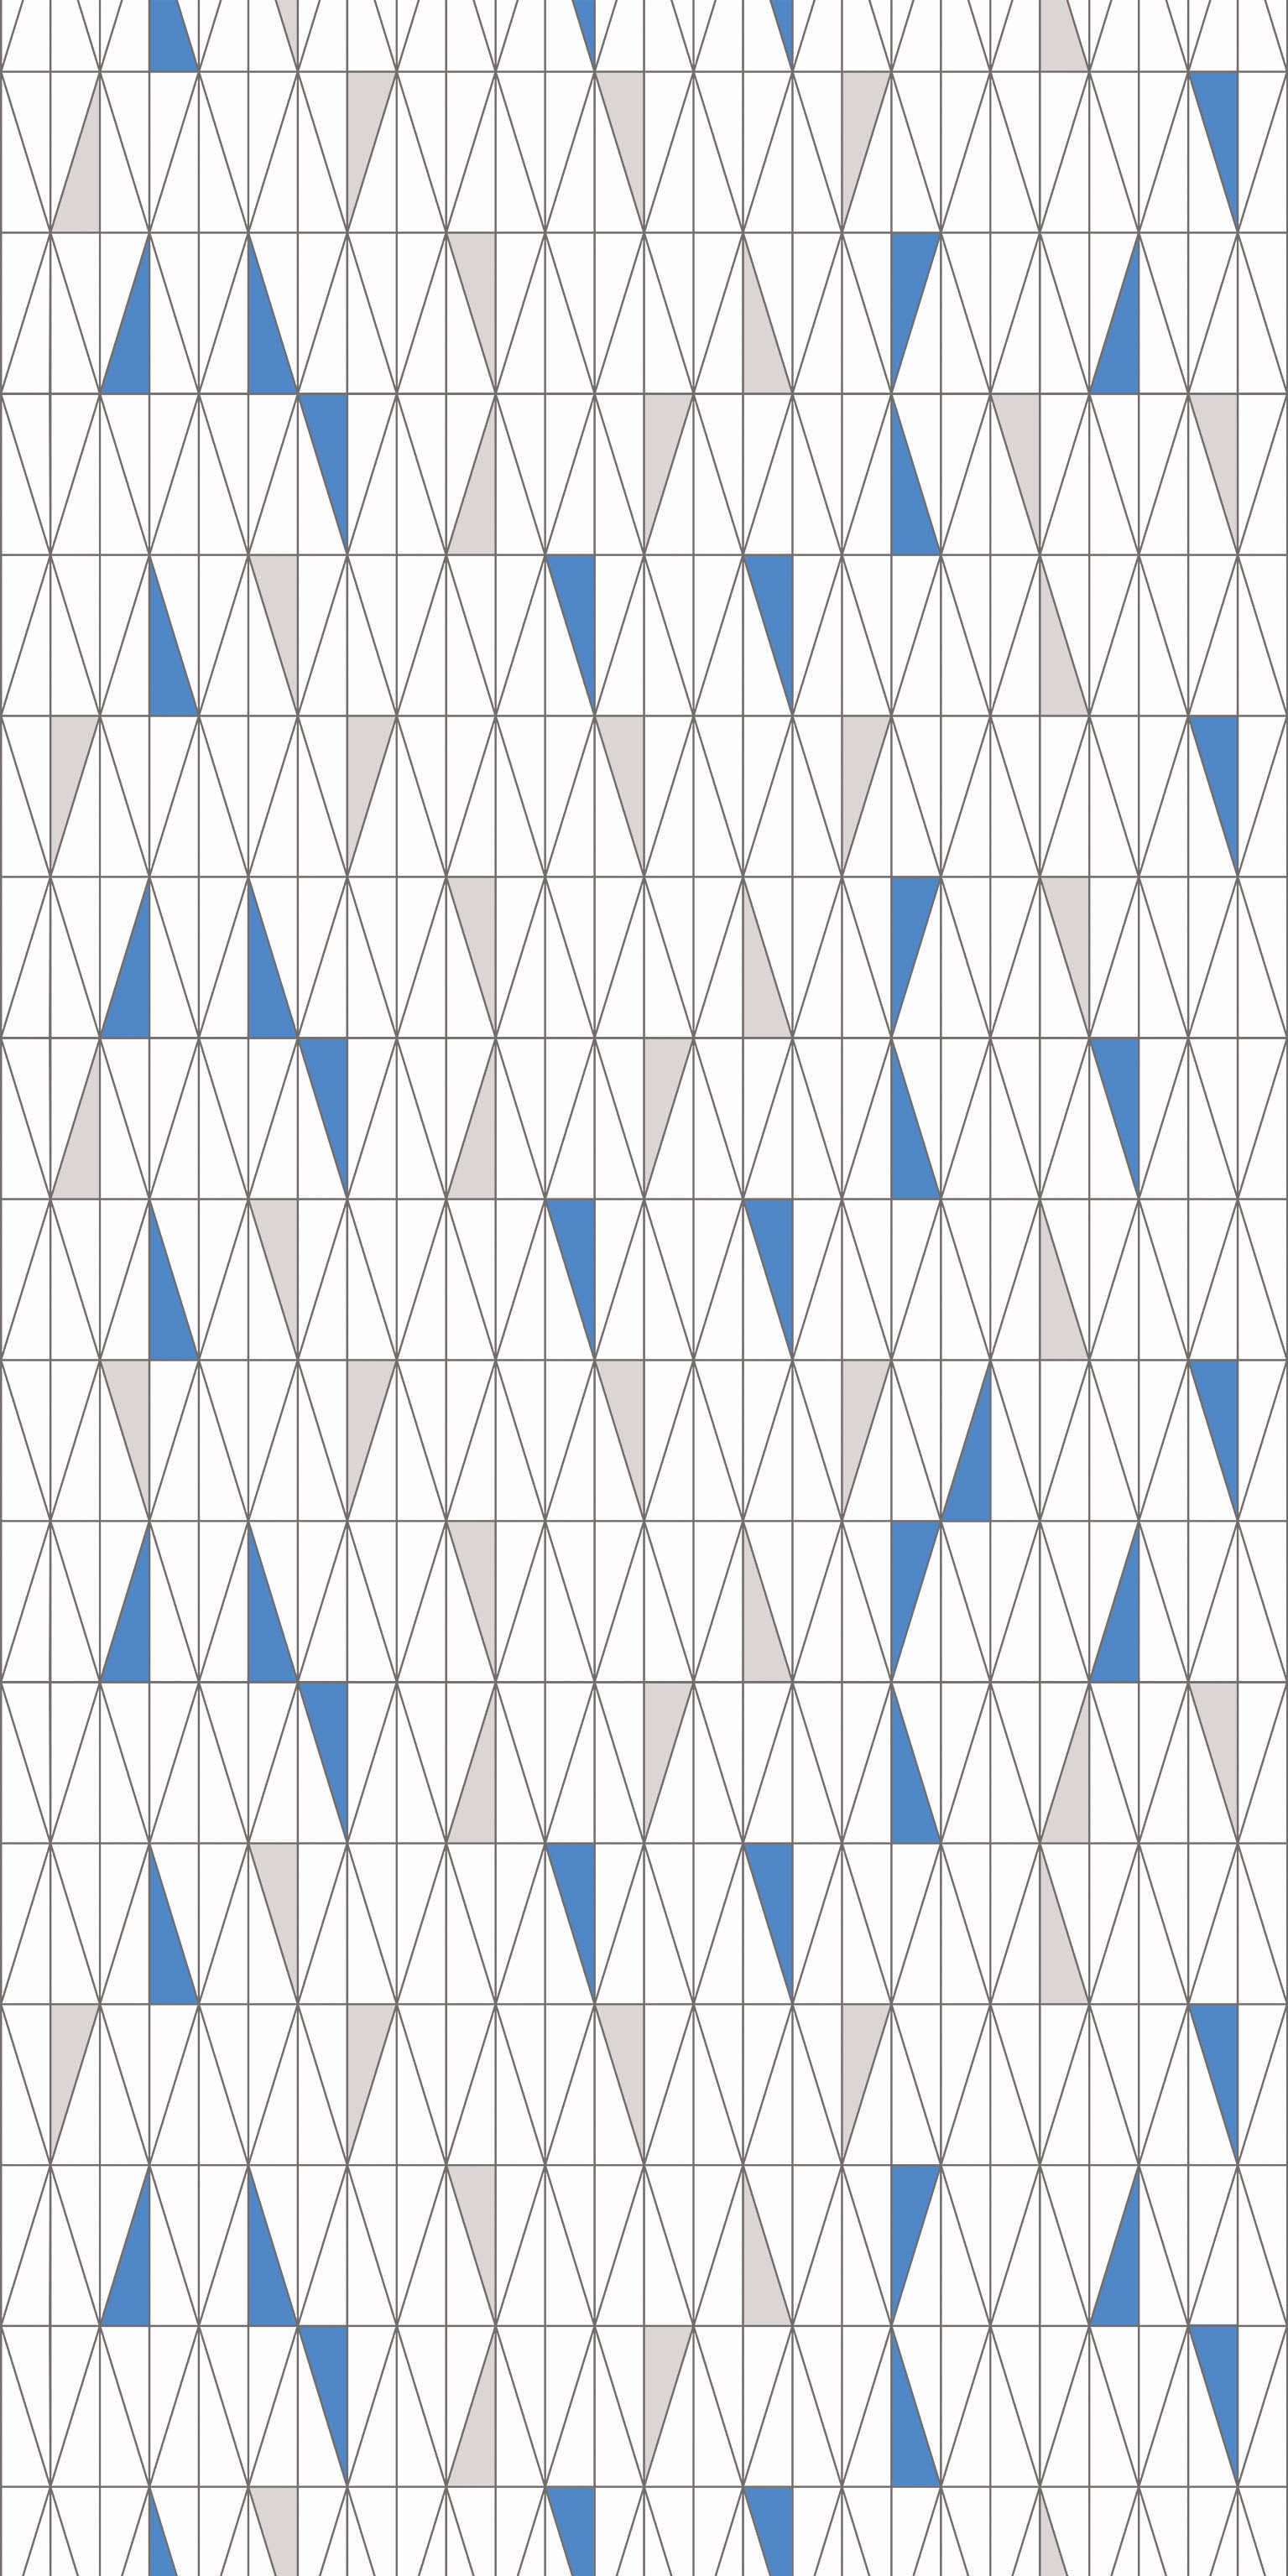 Пленка для термопереноса 340-4 треугольники синь + серебро из коллекции Freedom